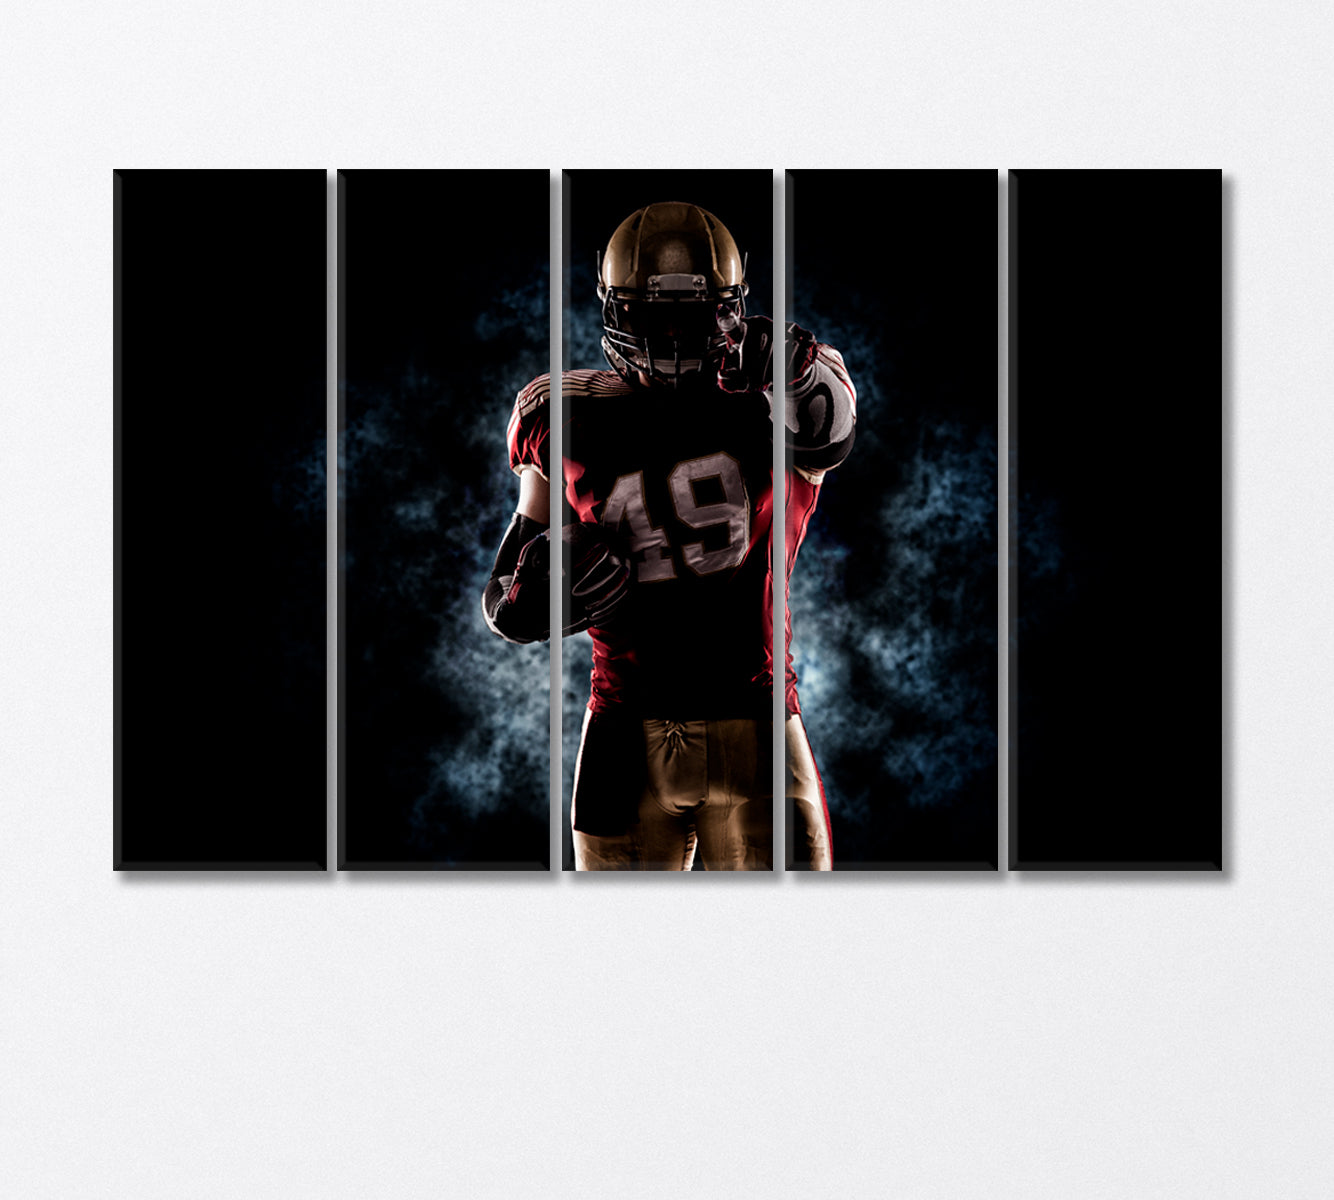 American Football Player in Dark Canvas Print-Canvas Print-CetArt-5 Panels-36x24 inches-CetArt